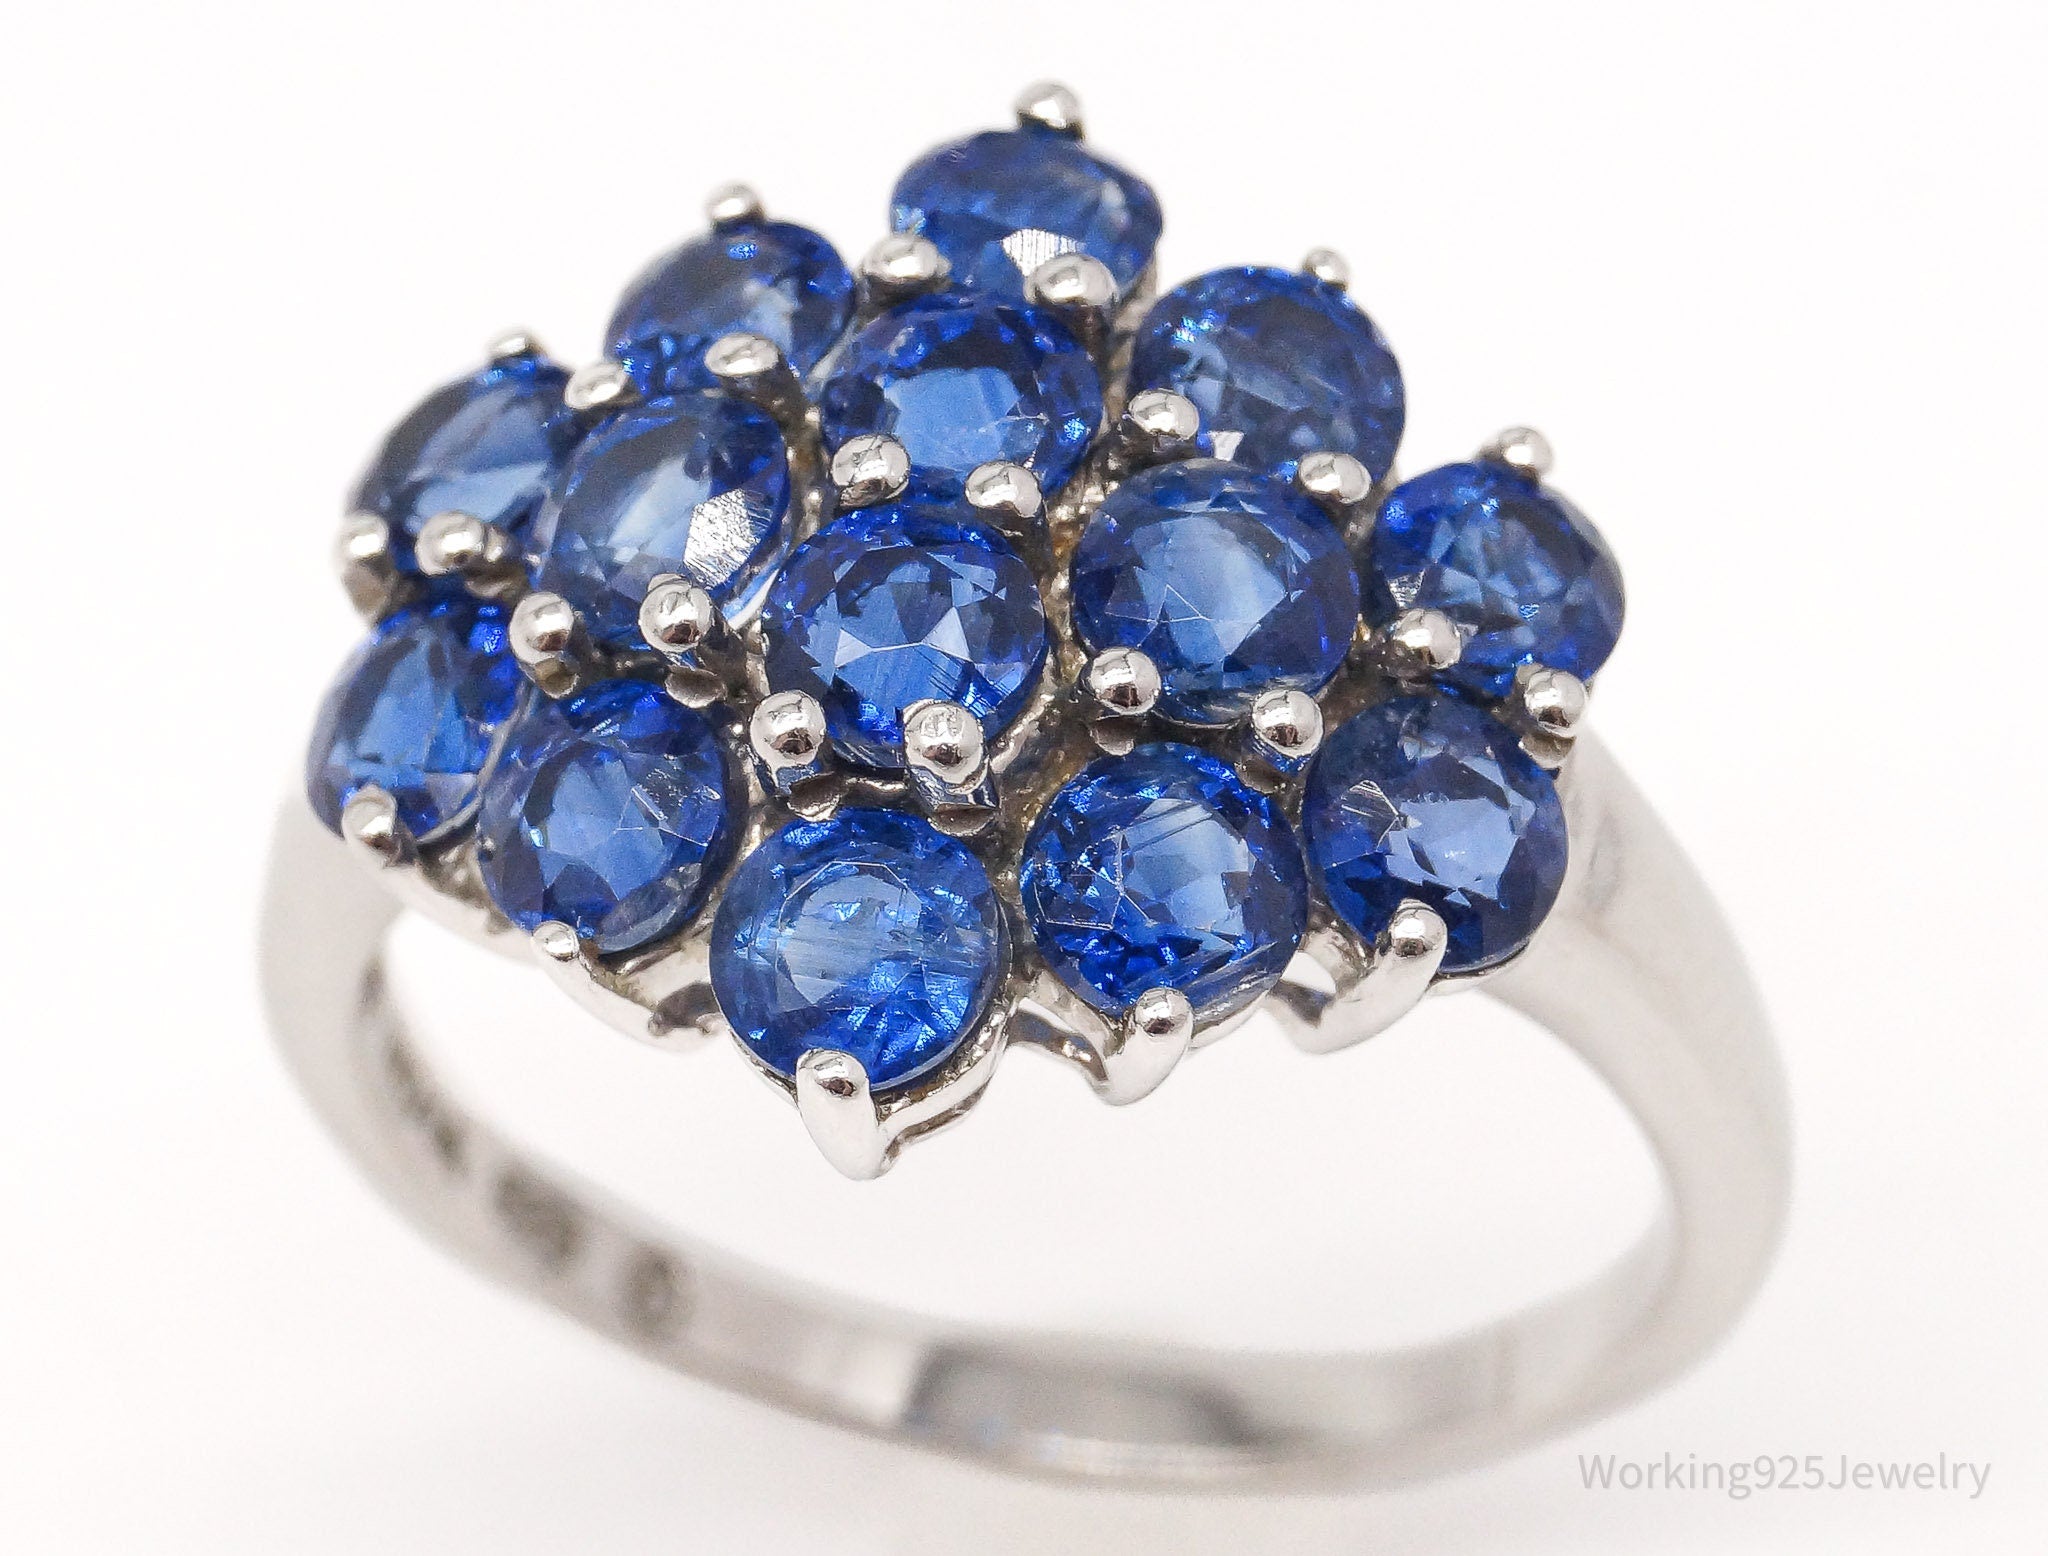 Vintage London Blue Topaz Sterling Silver Ring - Size 10